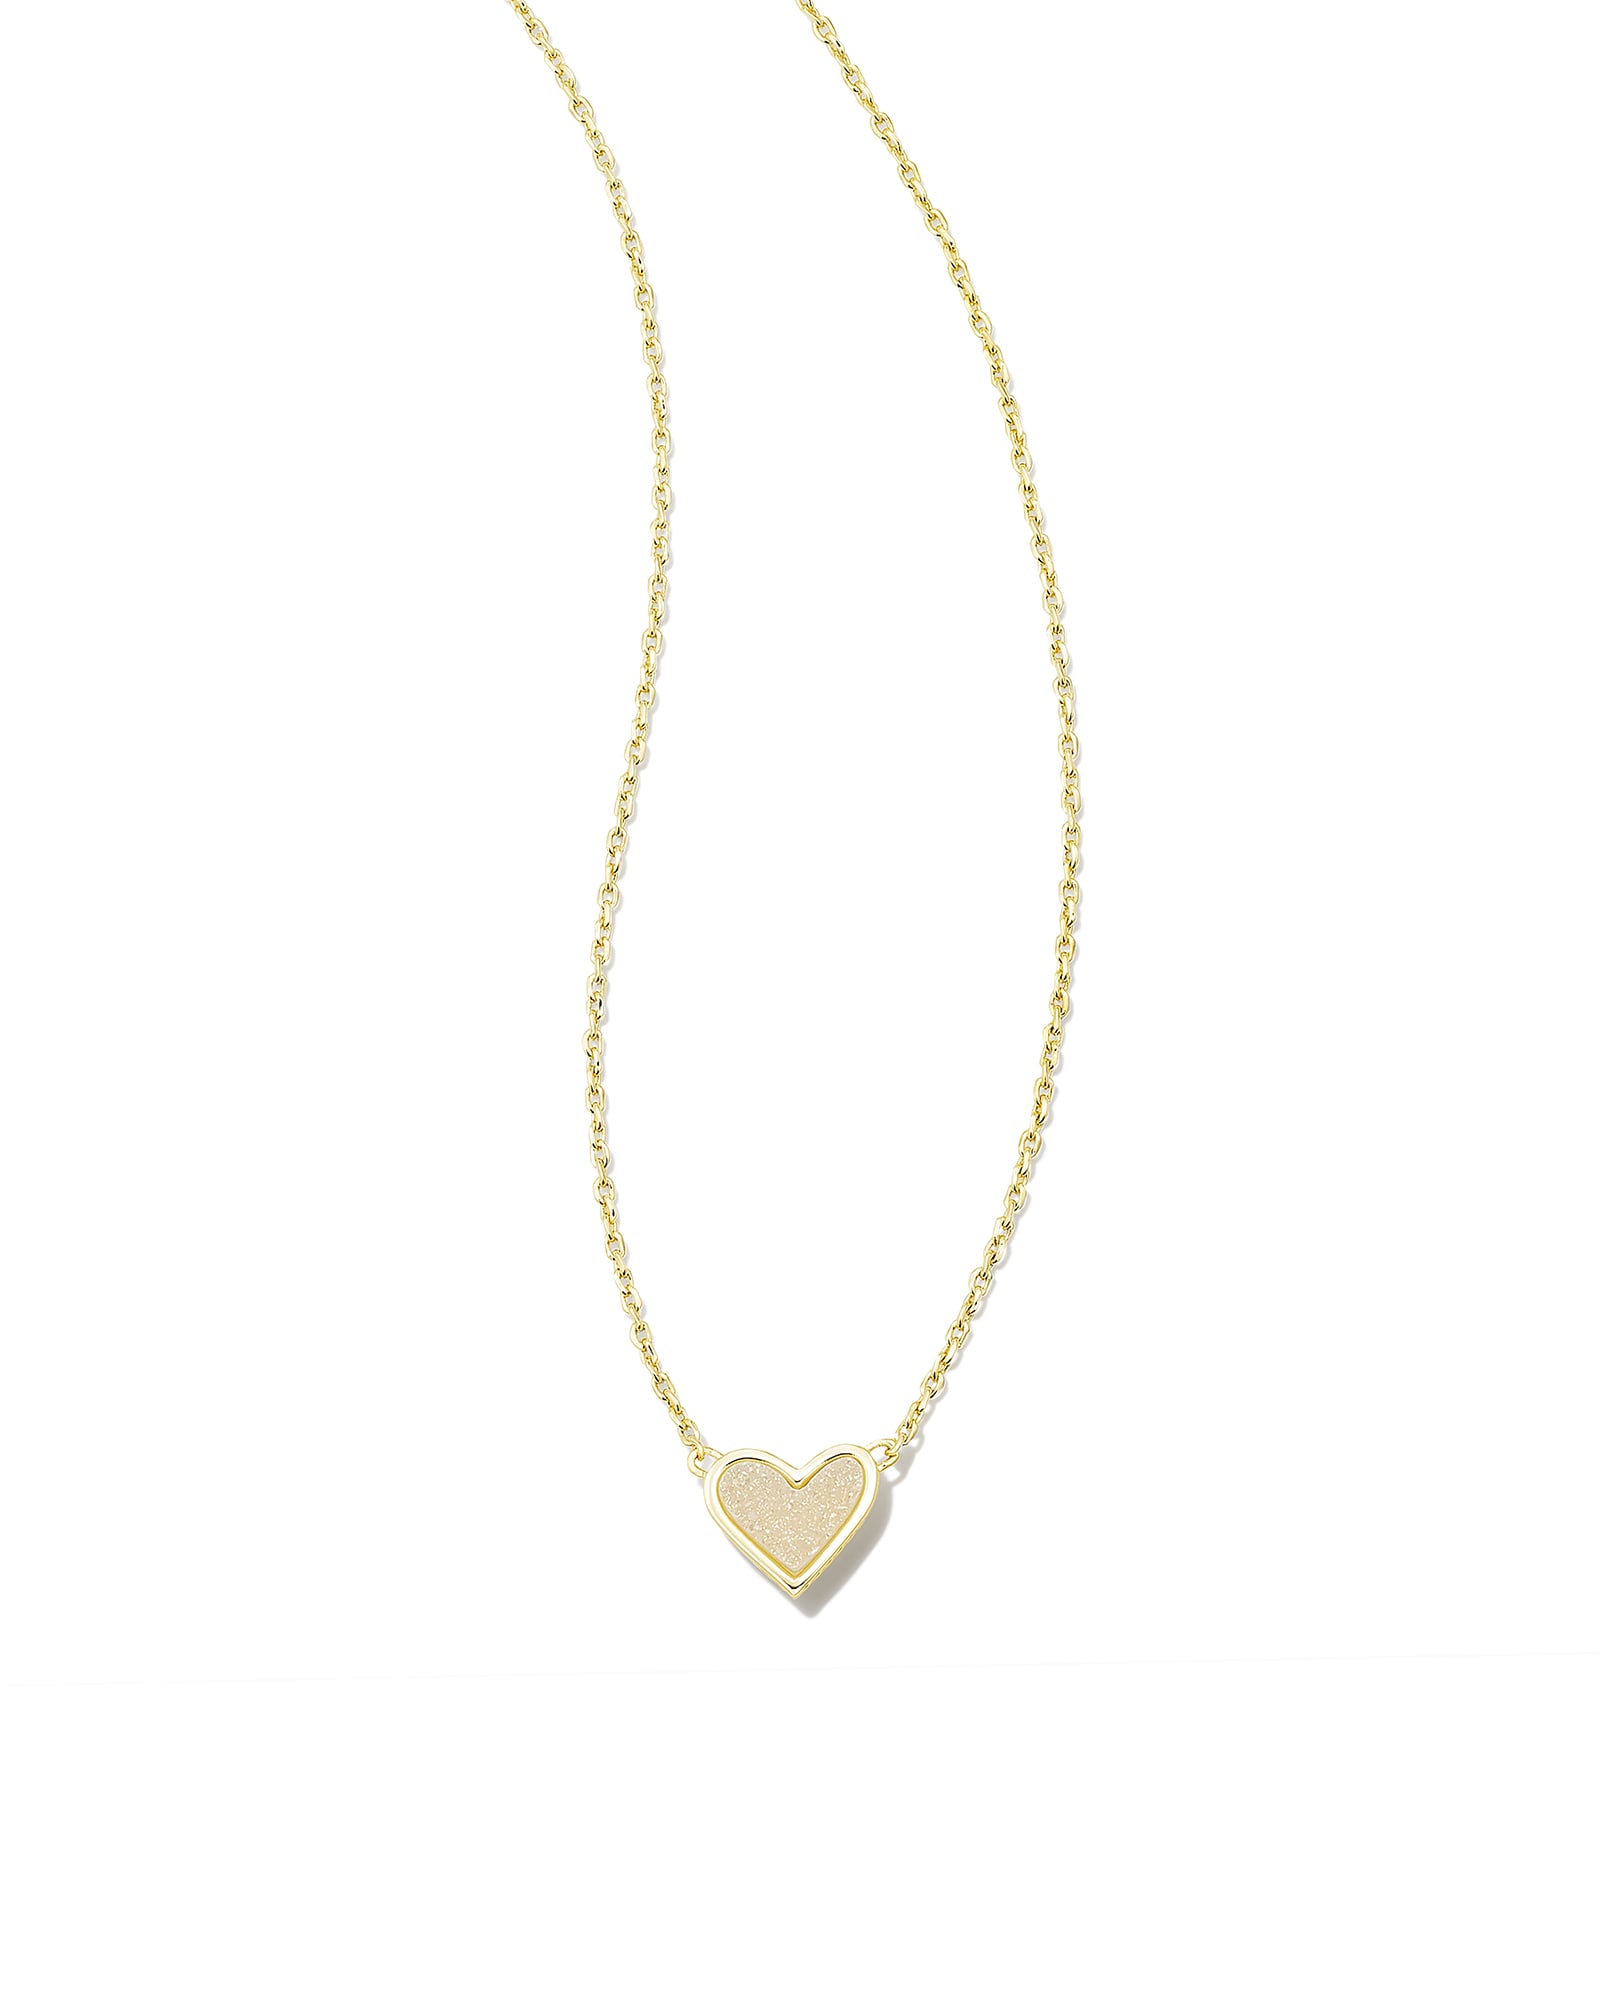 Framed Ari Heart Gold Short Pendant Necklace in Light Pink Drusy | Kendra Scott | Kendra Scott